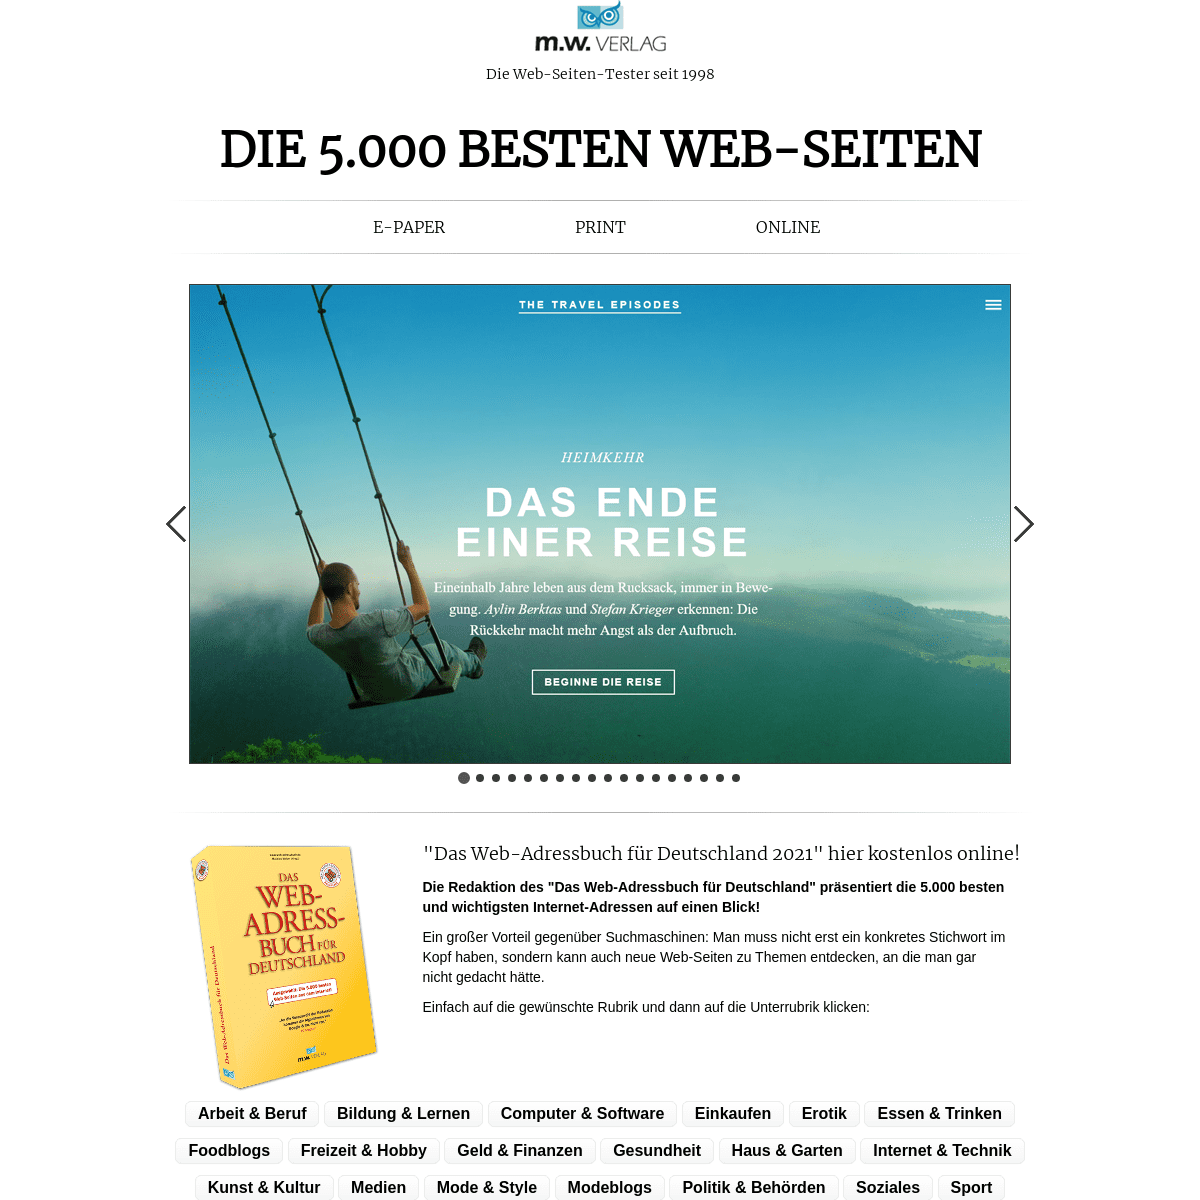 A complete backup of web-adressbuch.de